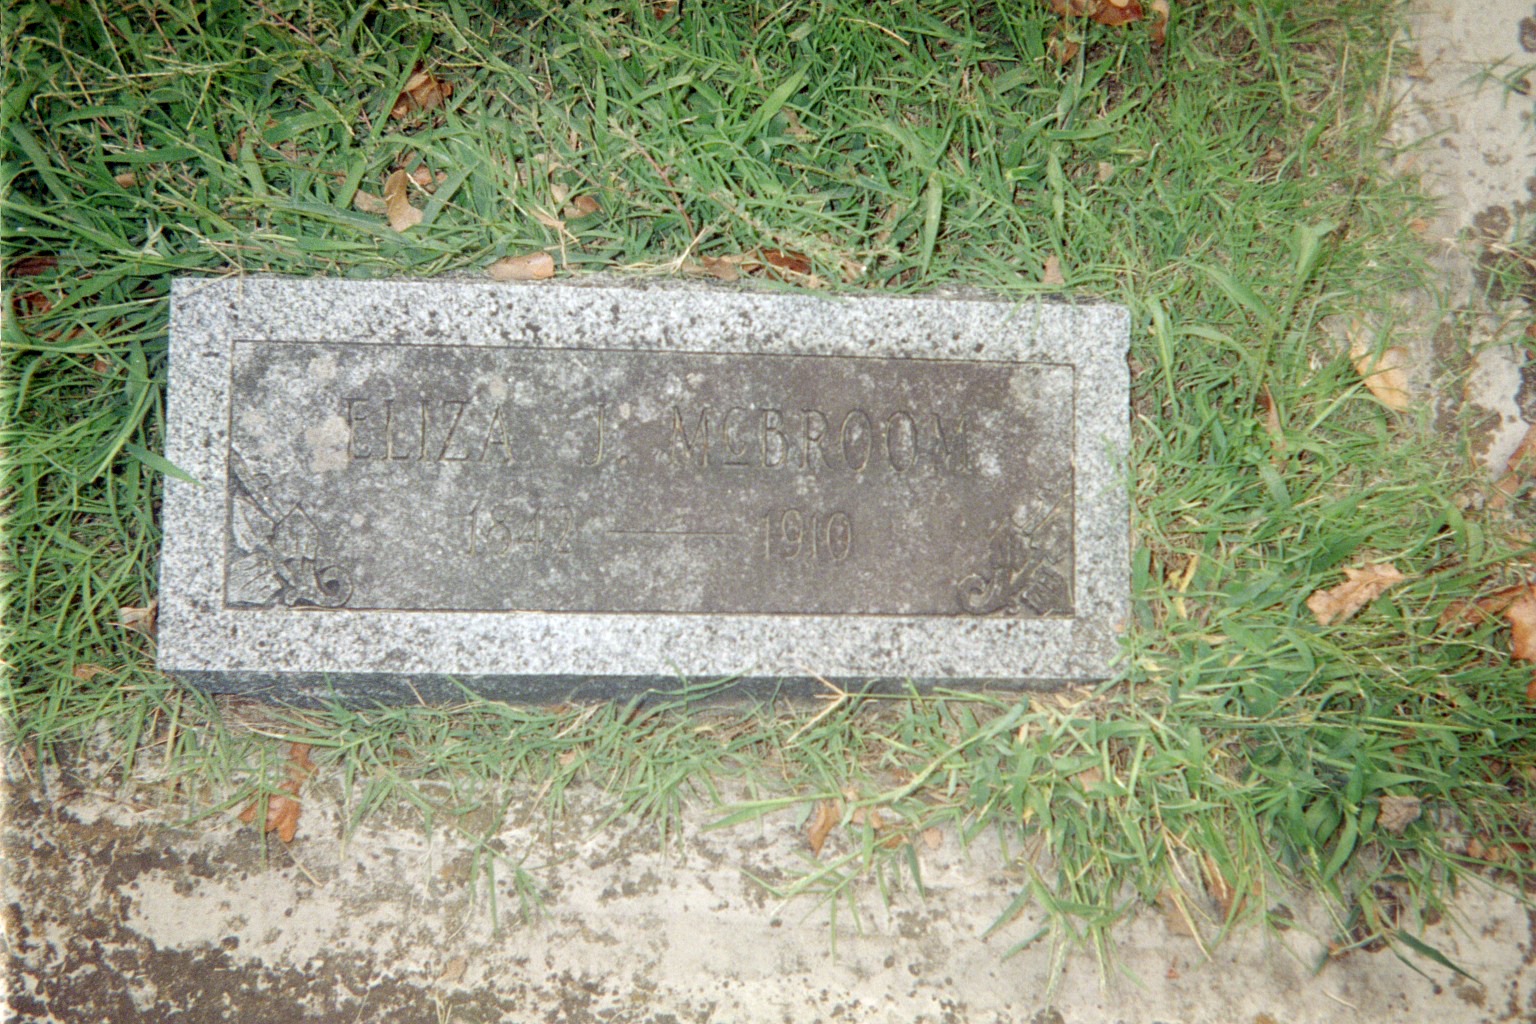 Eliza McBroom headstone